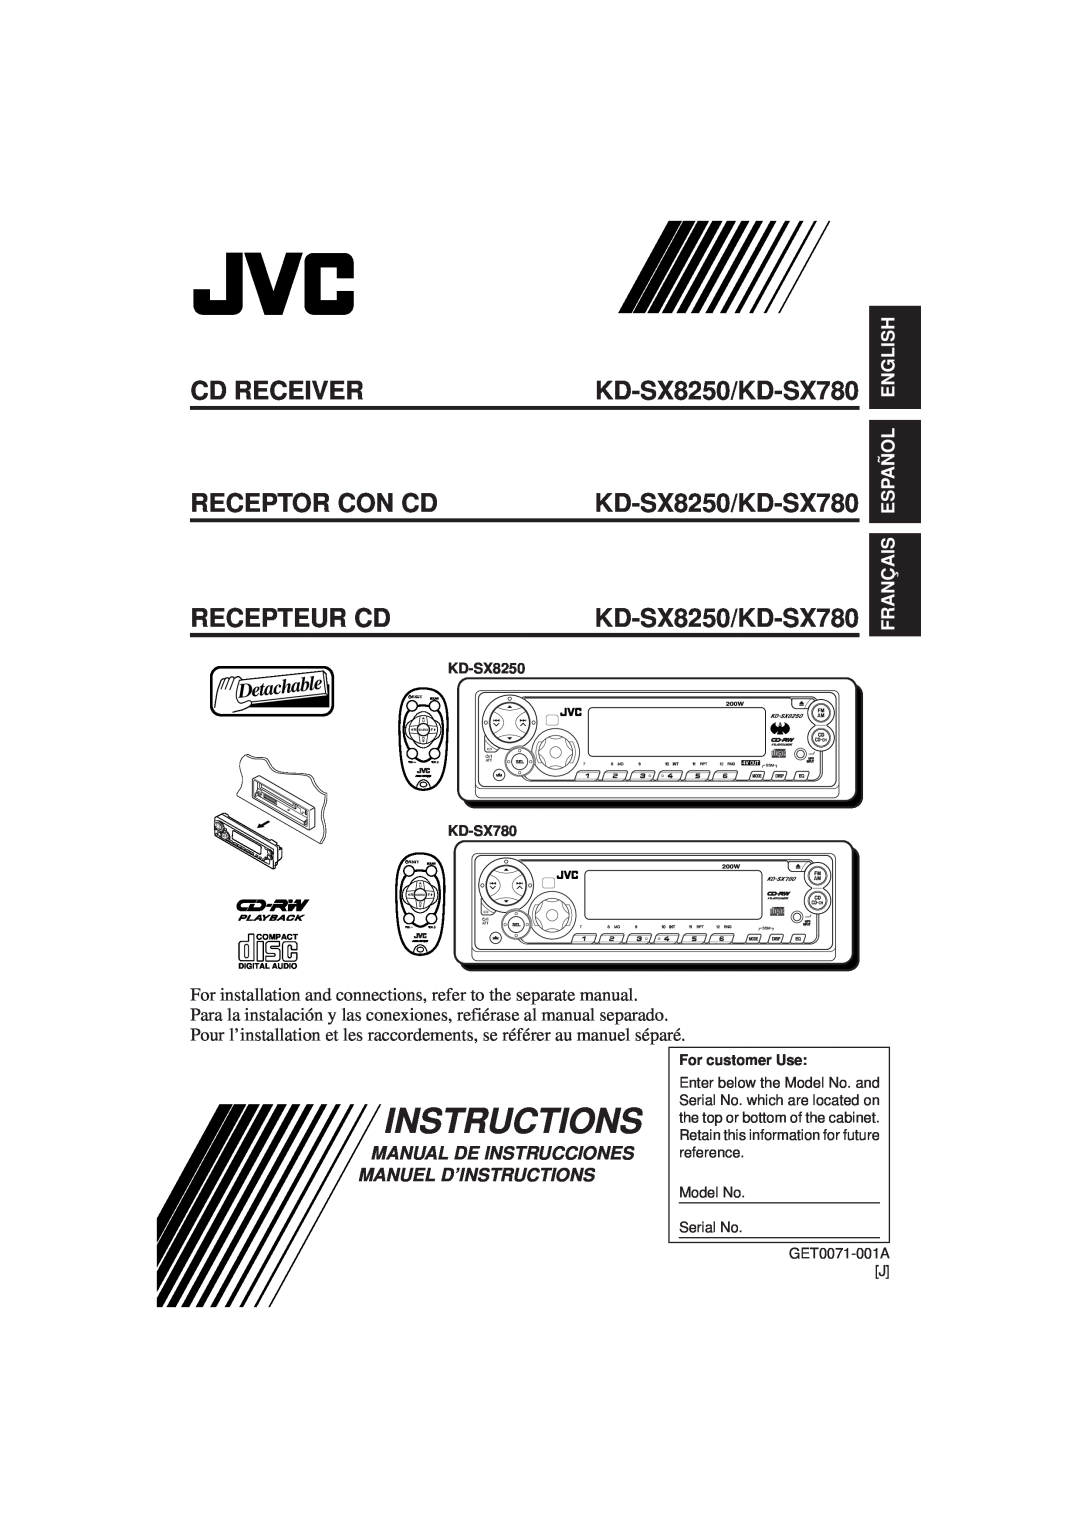 JVC manual Cd Receiver Receptor Con Cd Recepteur Cd, KD-SX8250/KD-SX780 KD-SX8250/KD-SX780, Français Español English 